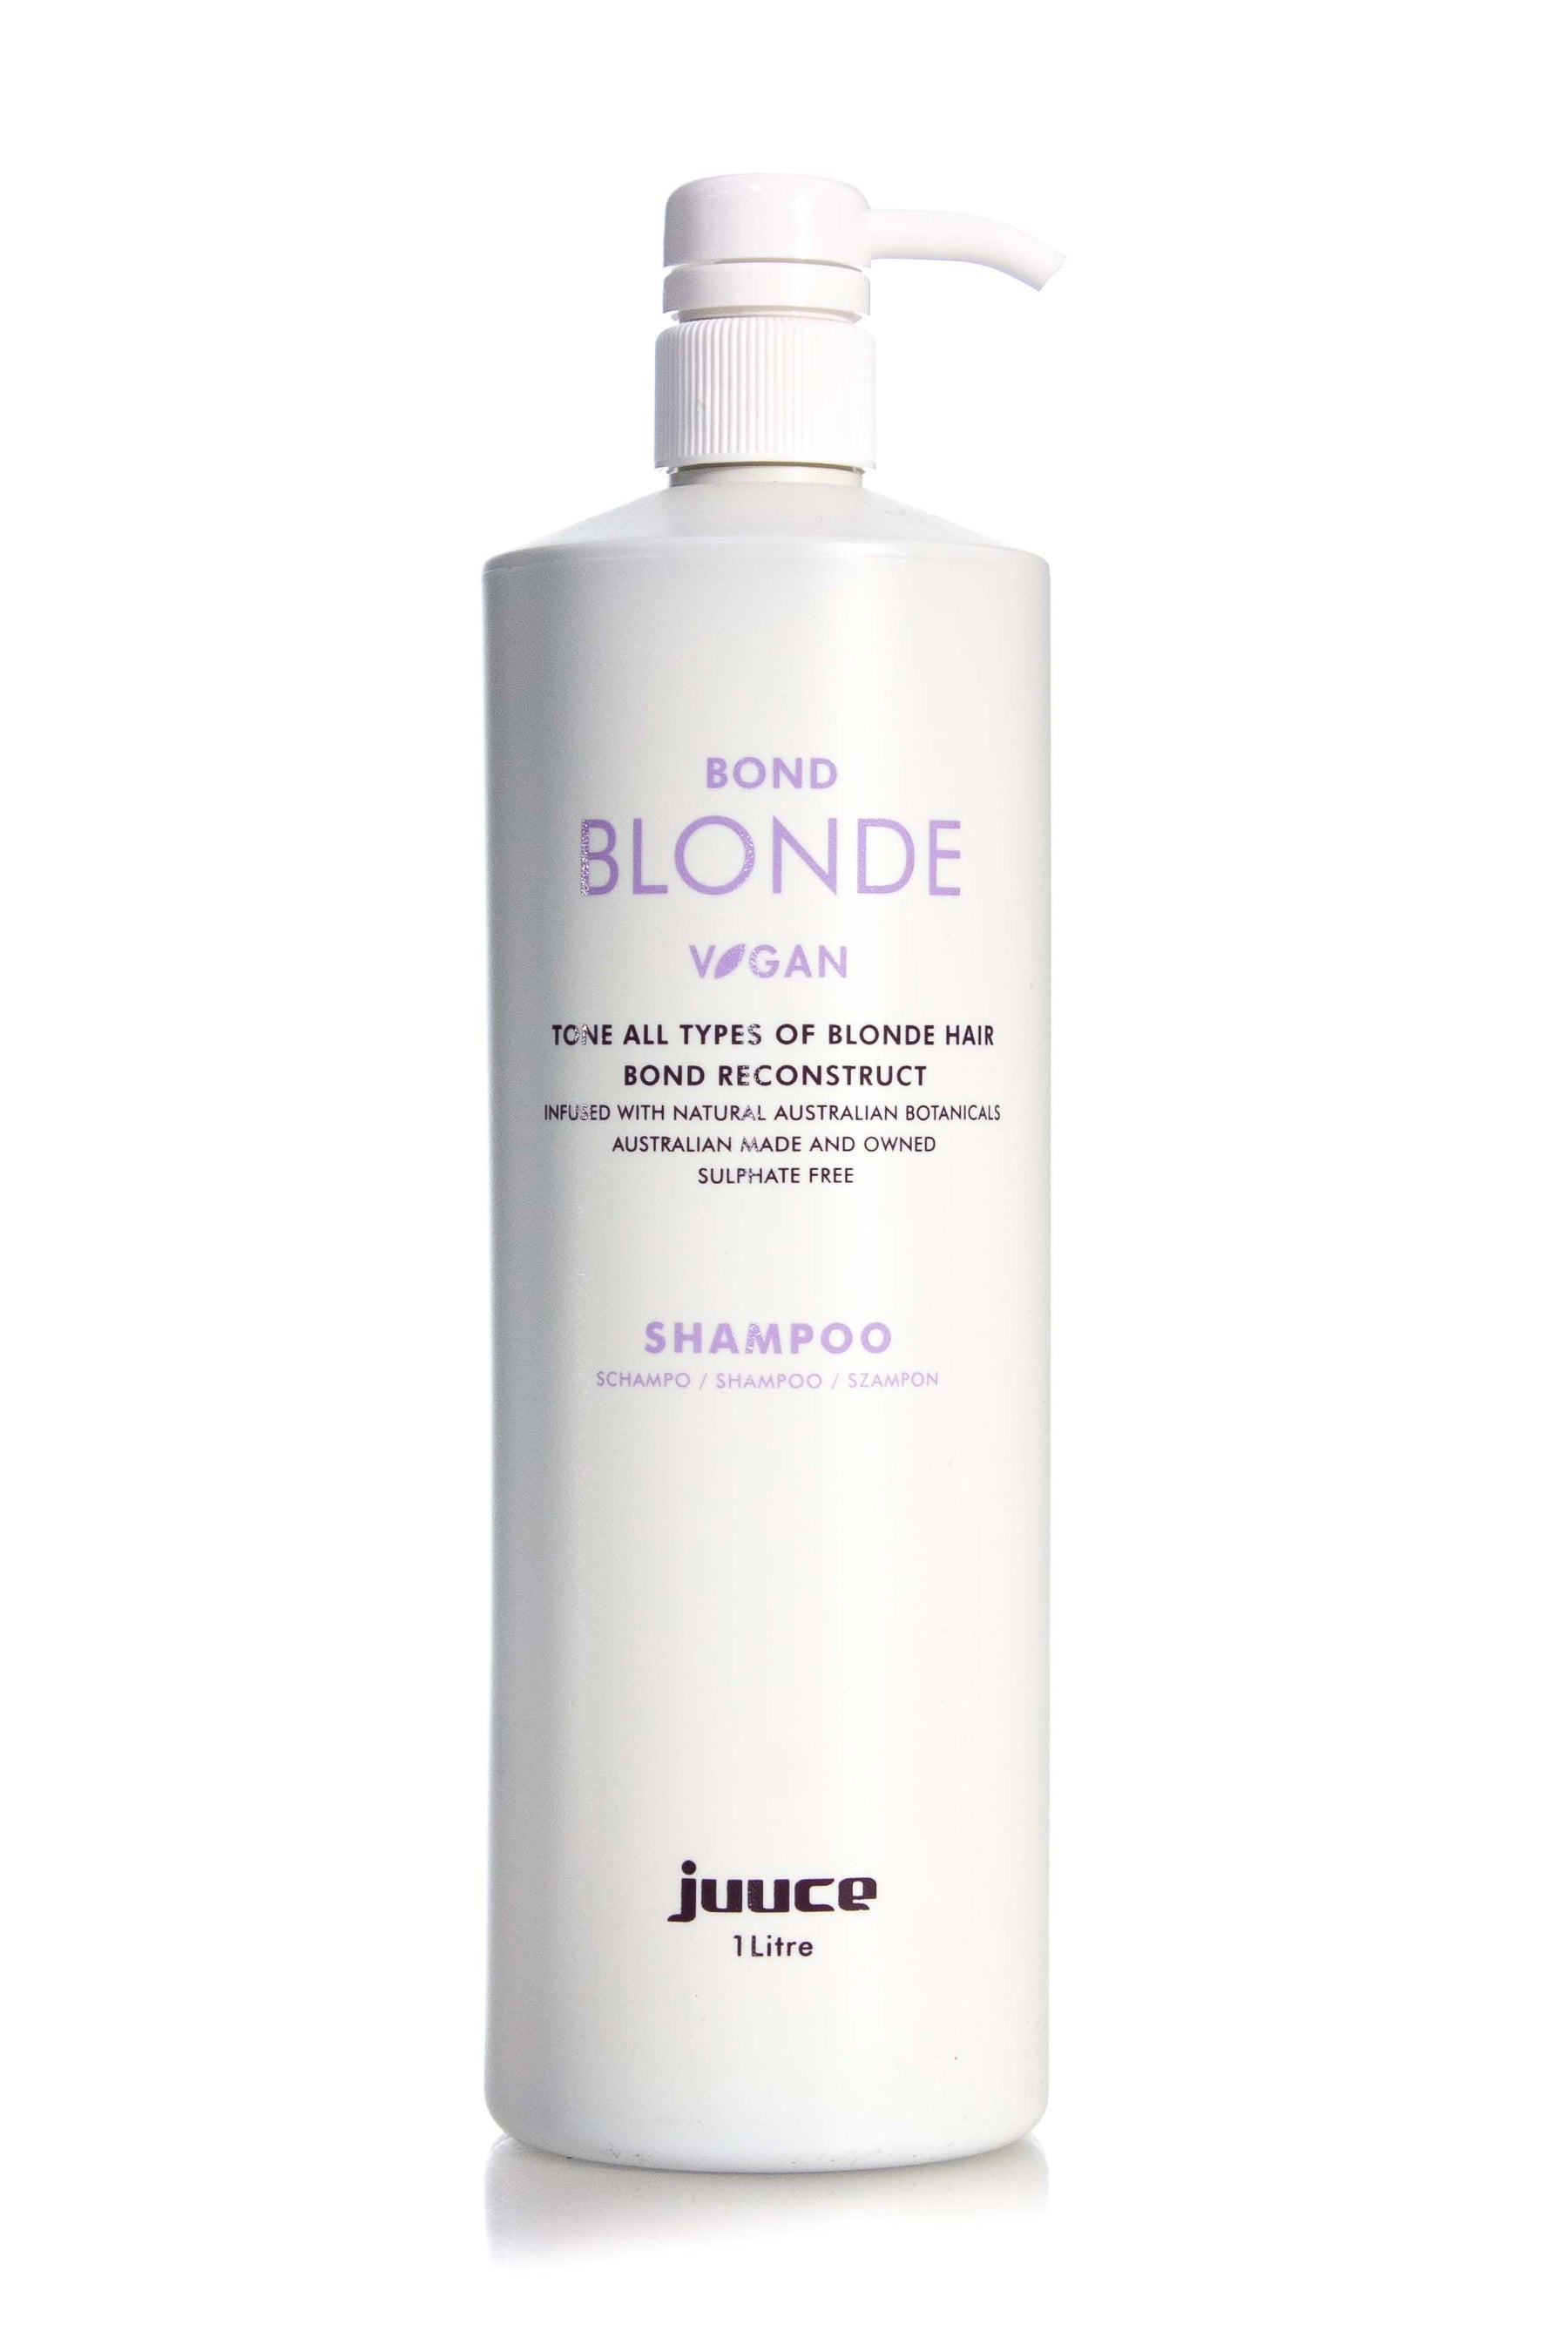 Juuce BOND BLONDE SHAMPOO 1LT (previously ultra blonde)